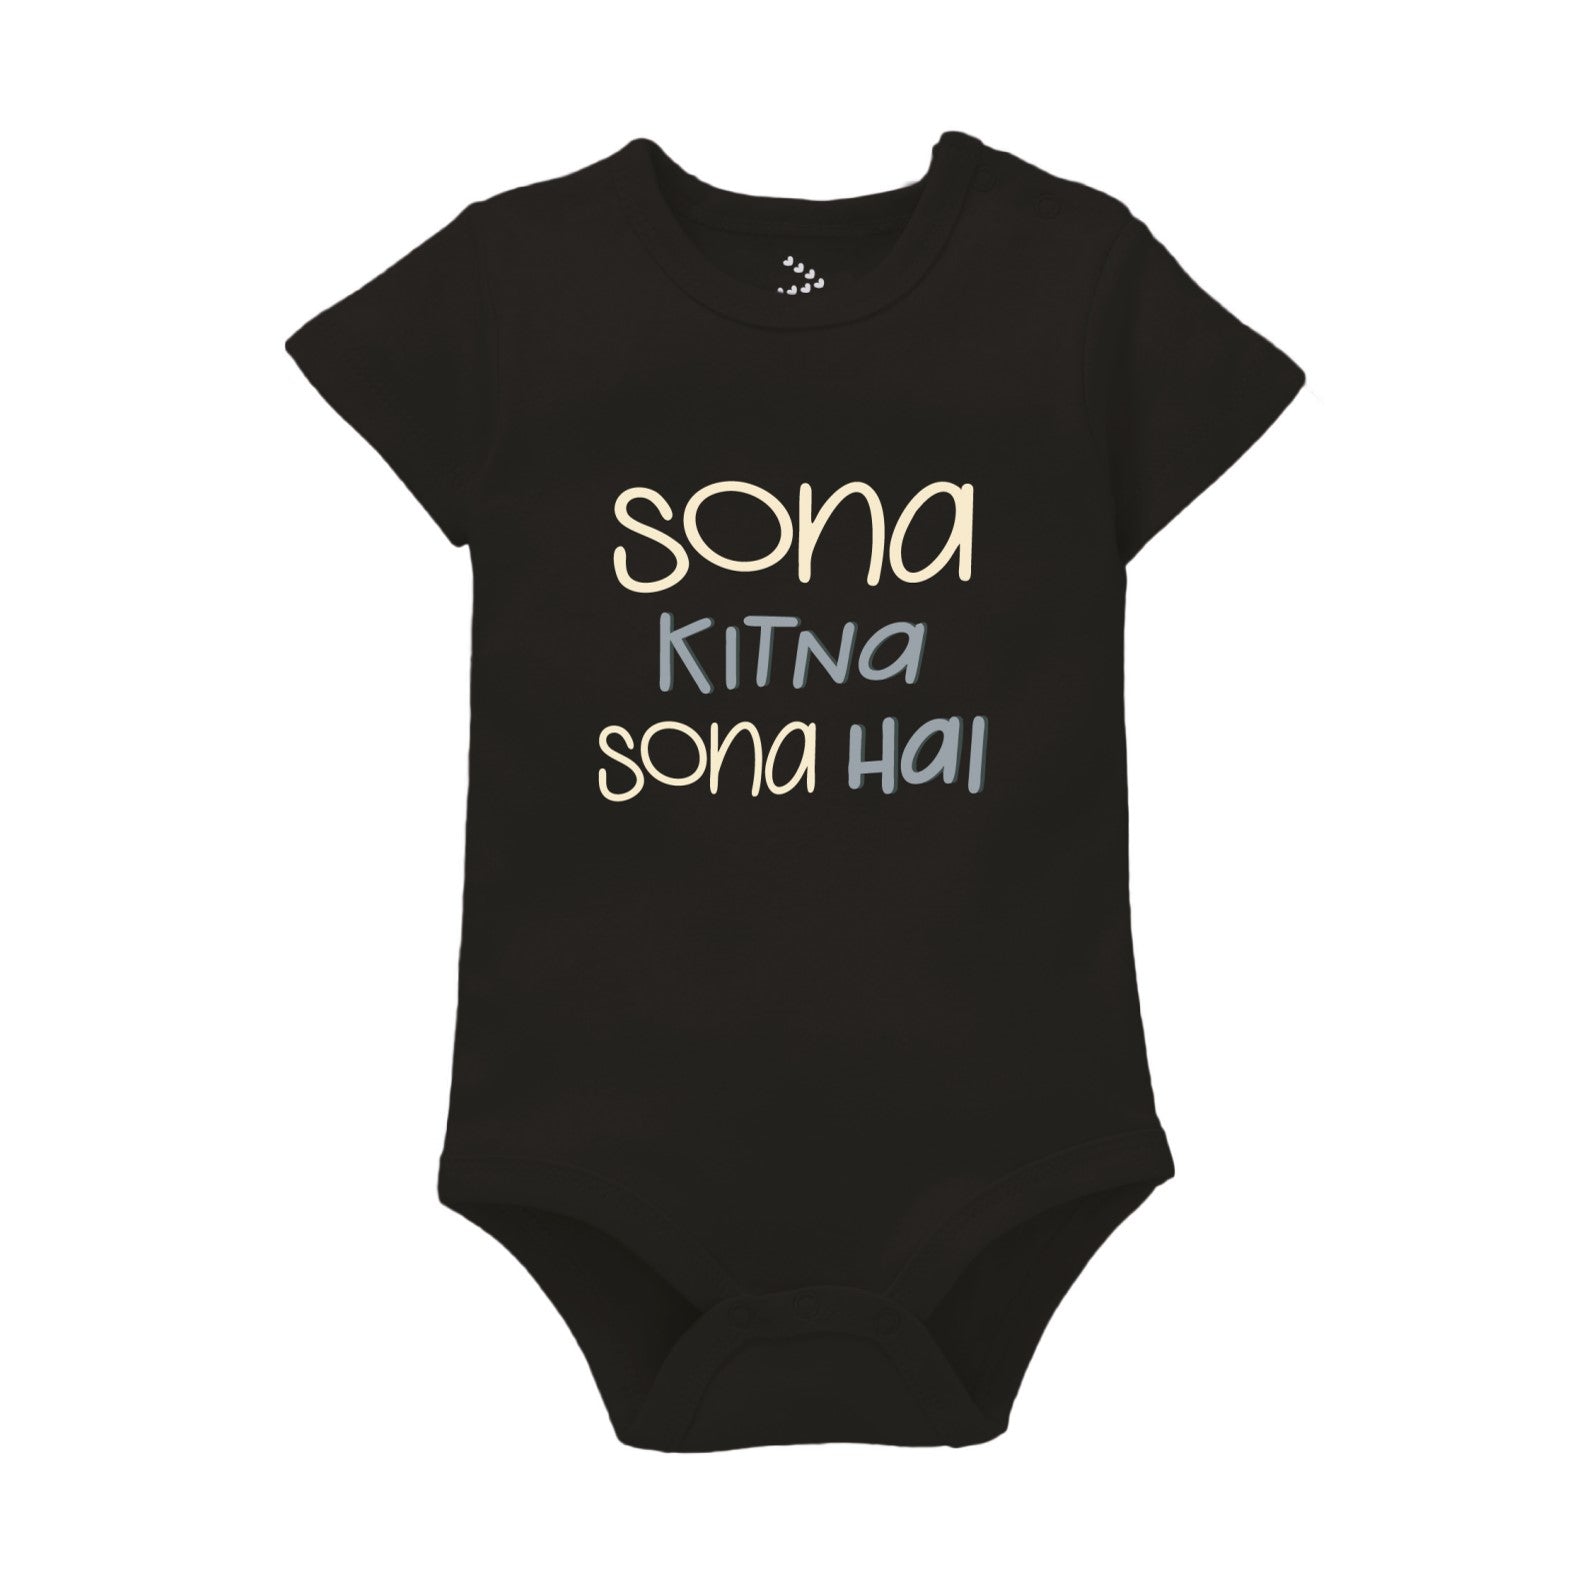 Sona Kitna Sona Hai Printed Baby Onesie